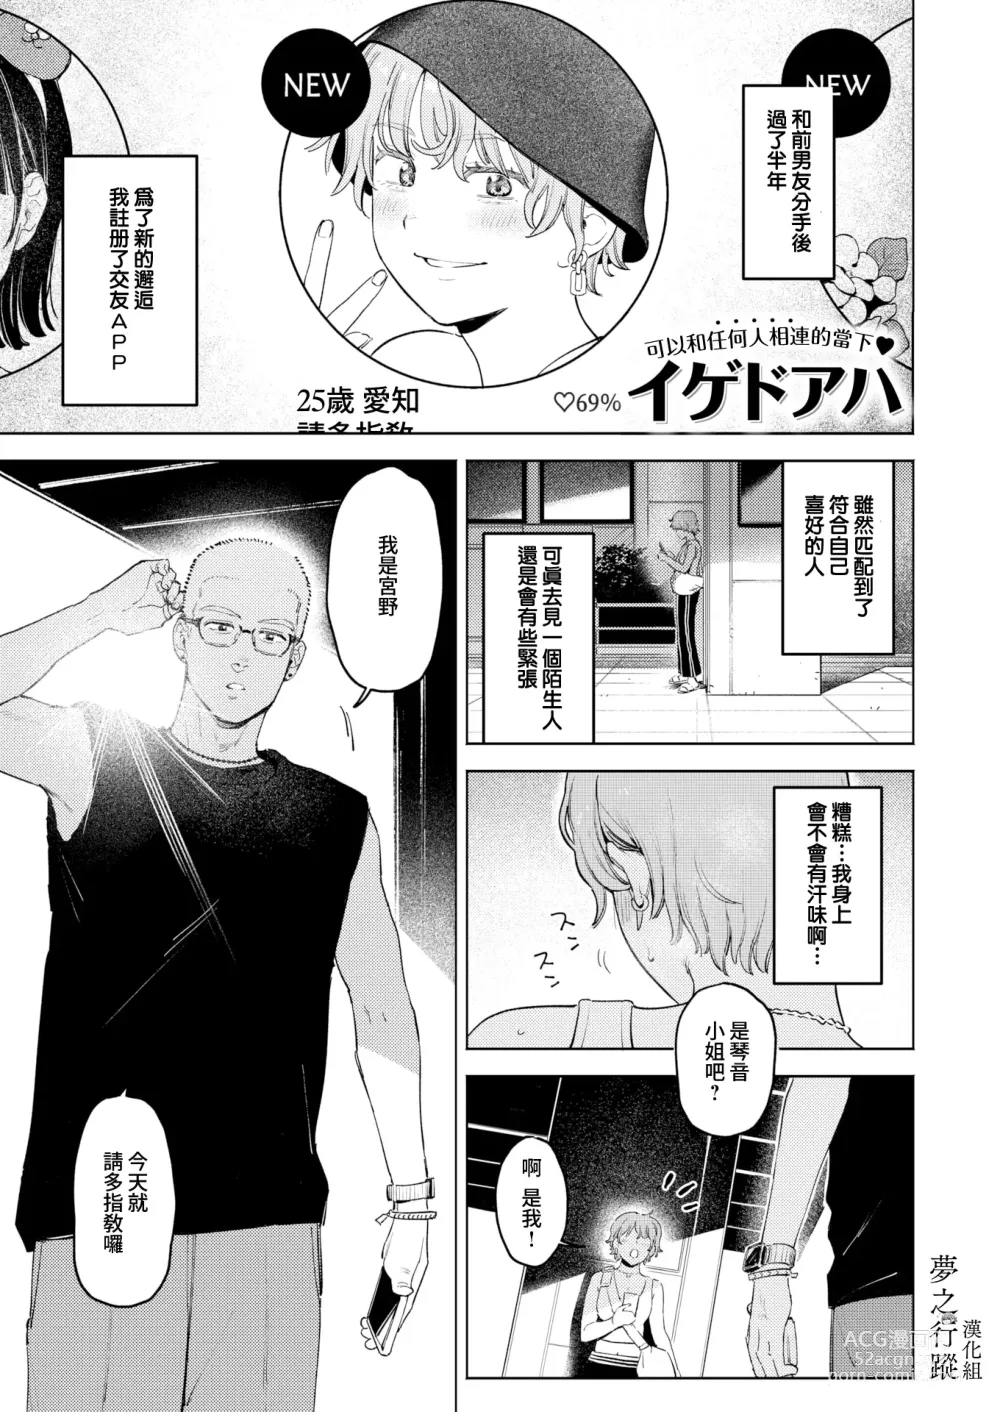 Page 1 of manga 搭錯紅線